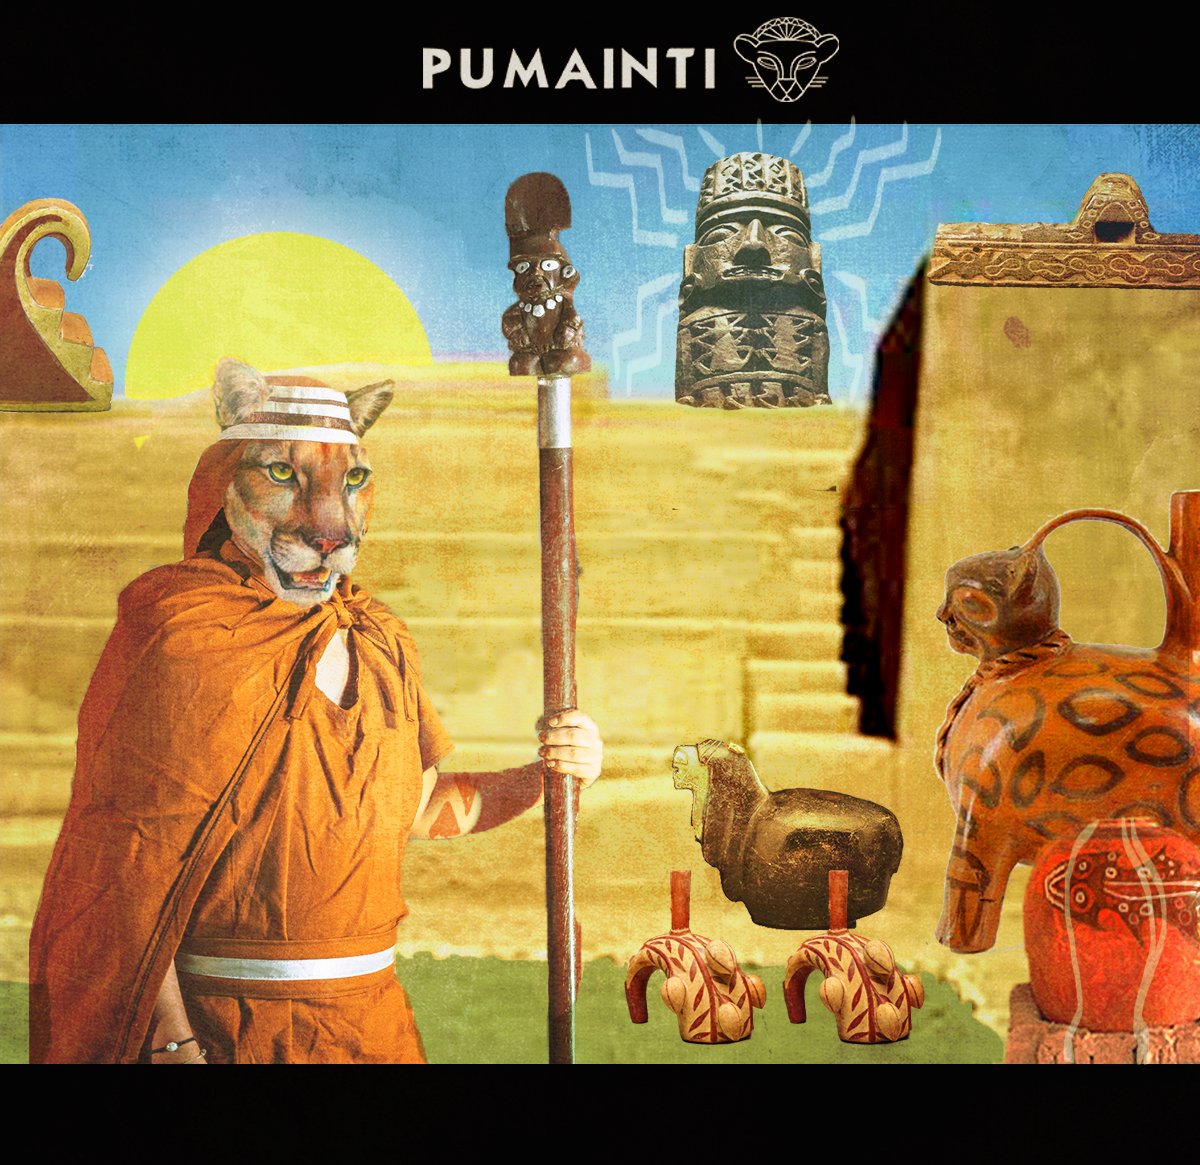 PUMA INTI 🔆🐆Creative Studio /    Lima 🇵🇪 SouthAmerica  behance.net/pumainti 
instagram.com/puma.inti

#pumainti #visualstudio #designer #branding #photoedition #culture #peruvianartist #artedelima #limaperuculture #culturadelima  #puma #cougar #pyramids #piramides #Peruart